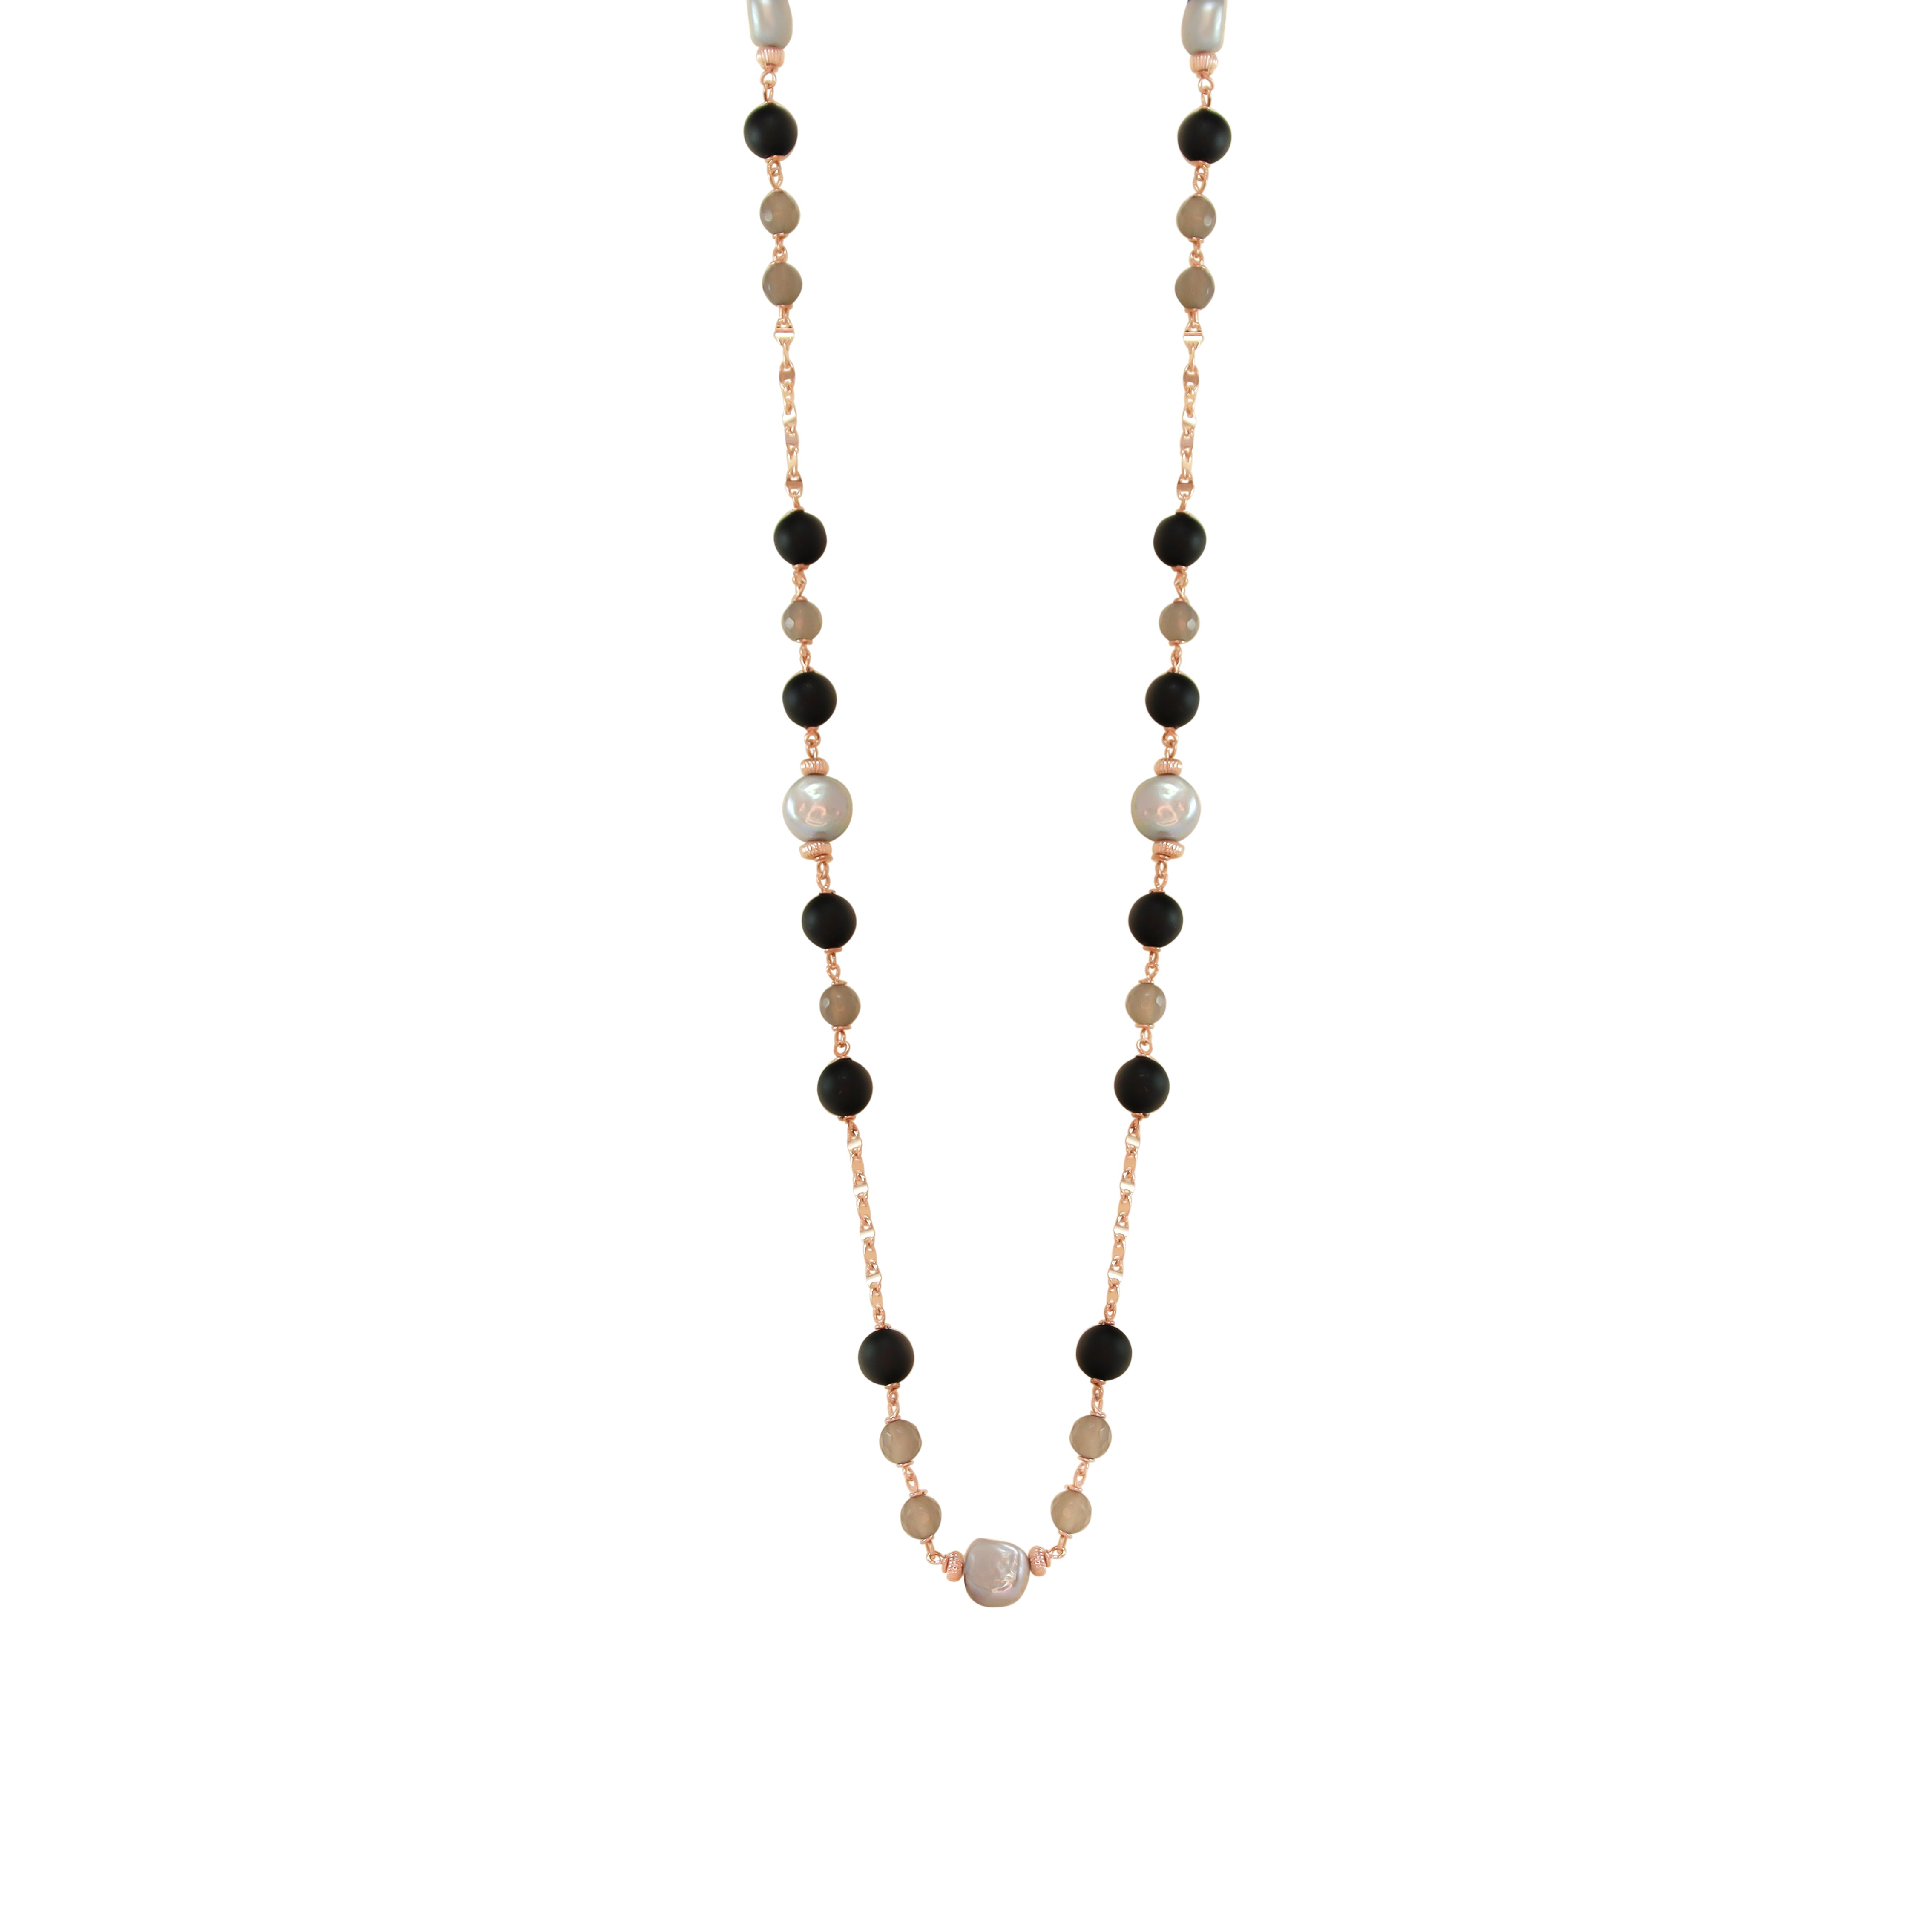 Grey Pearl & Uruguay Agate Necklace - 96cm